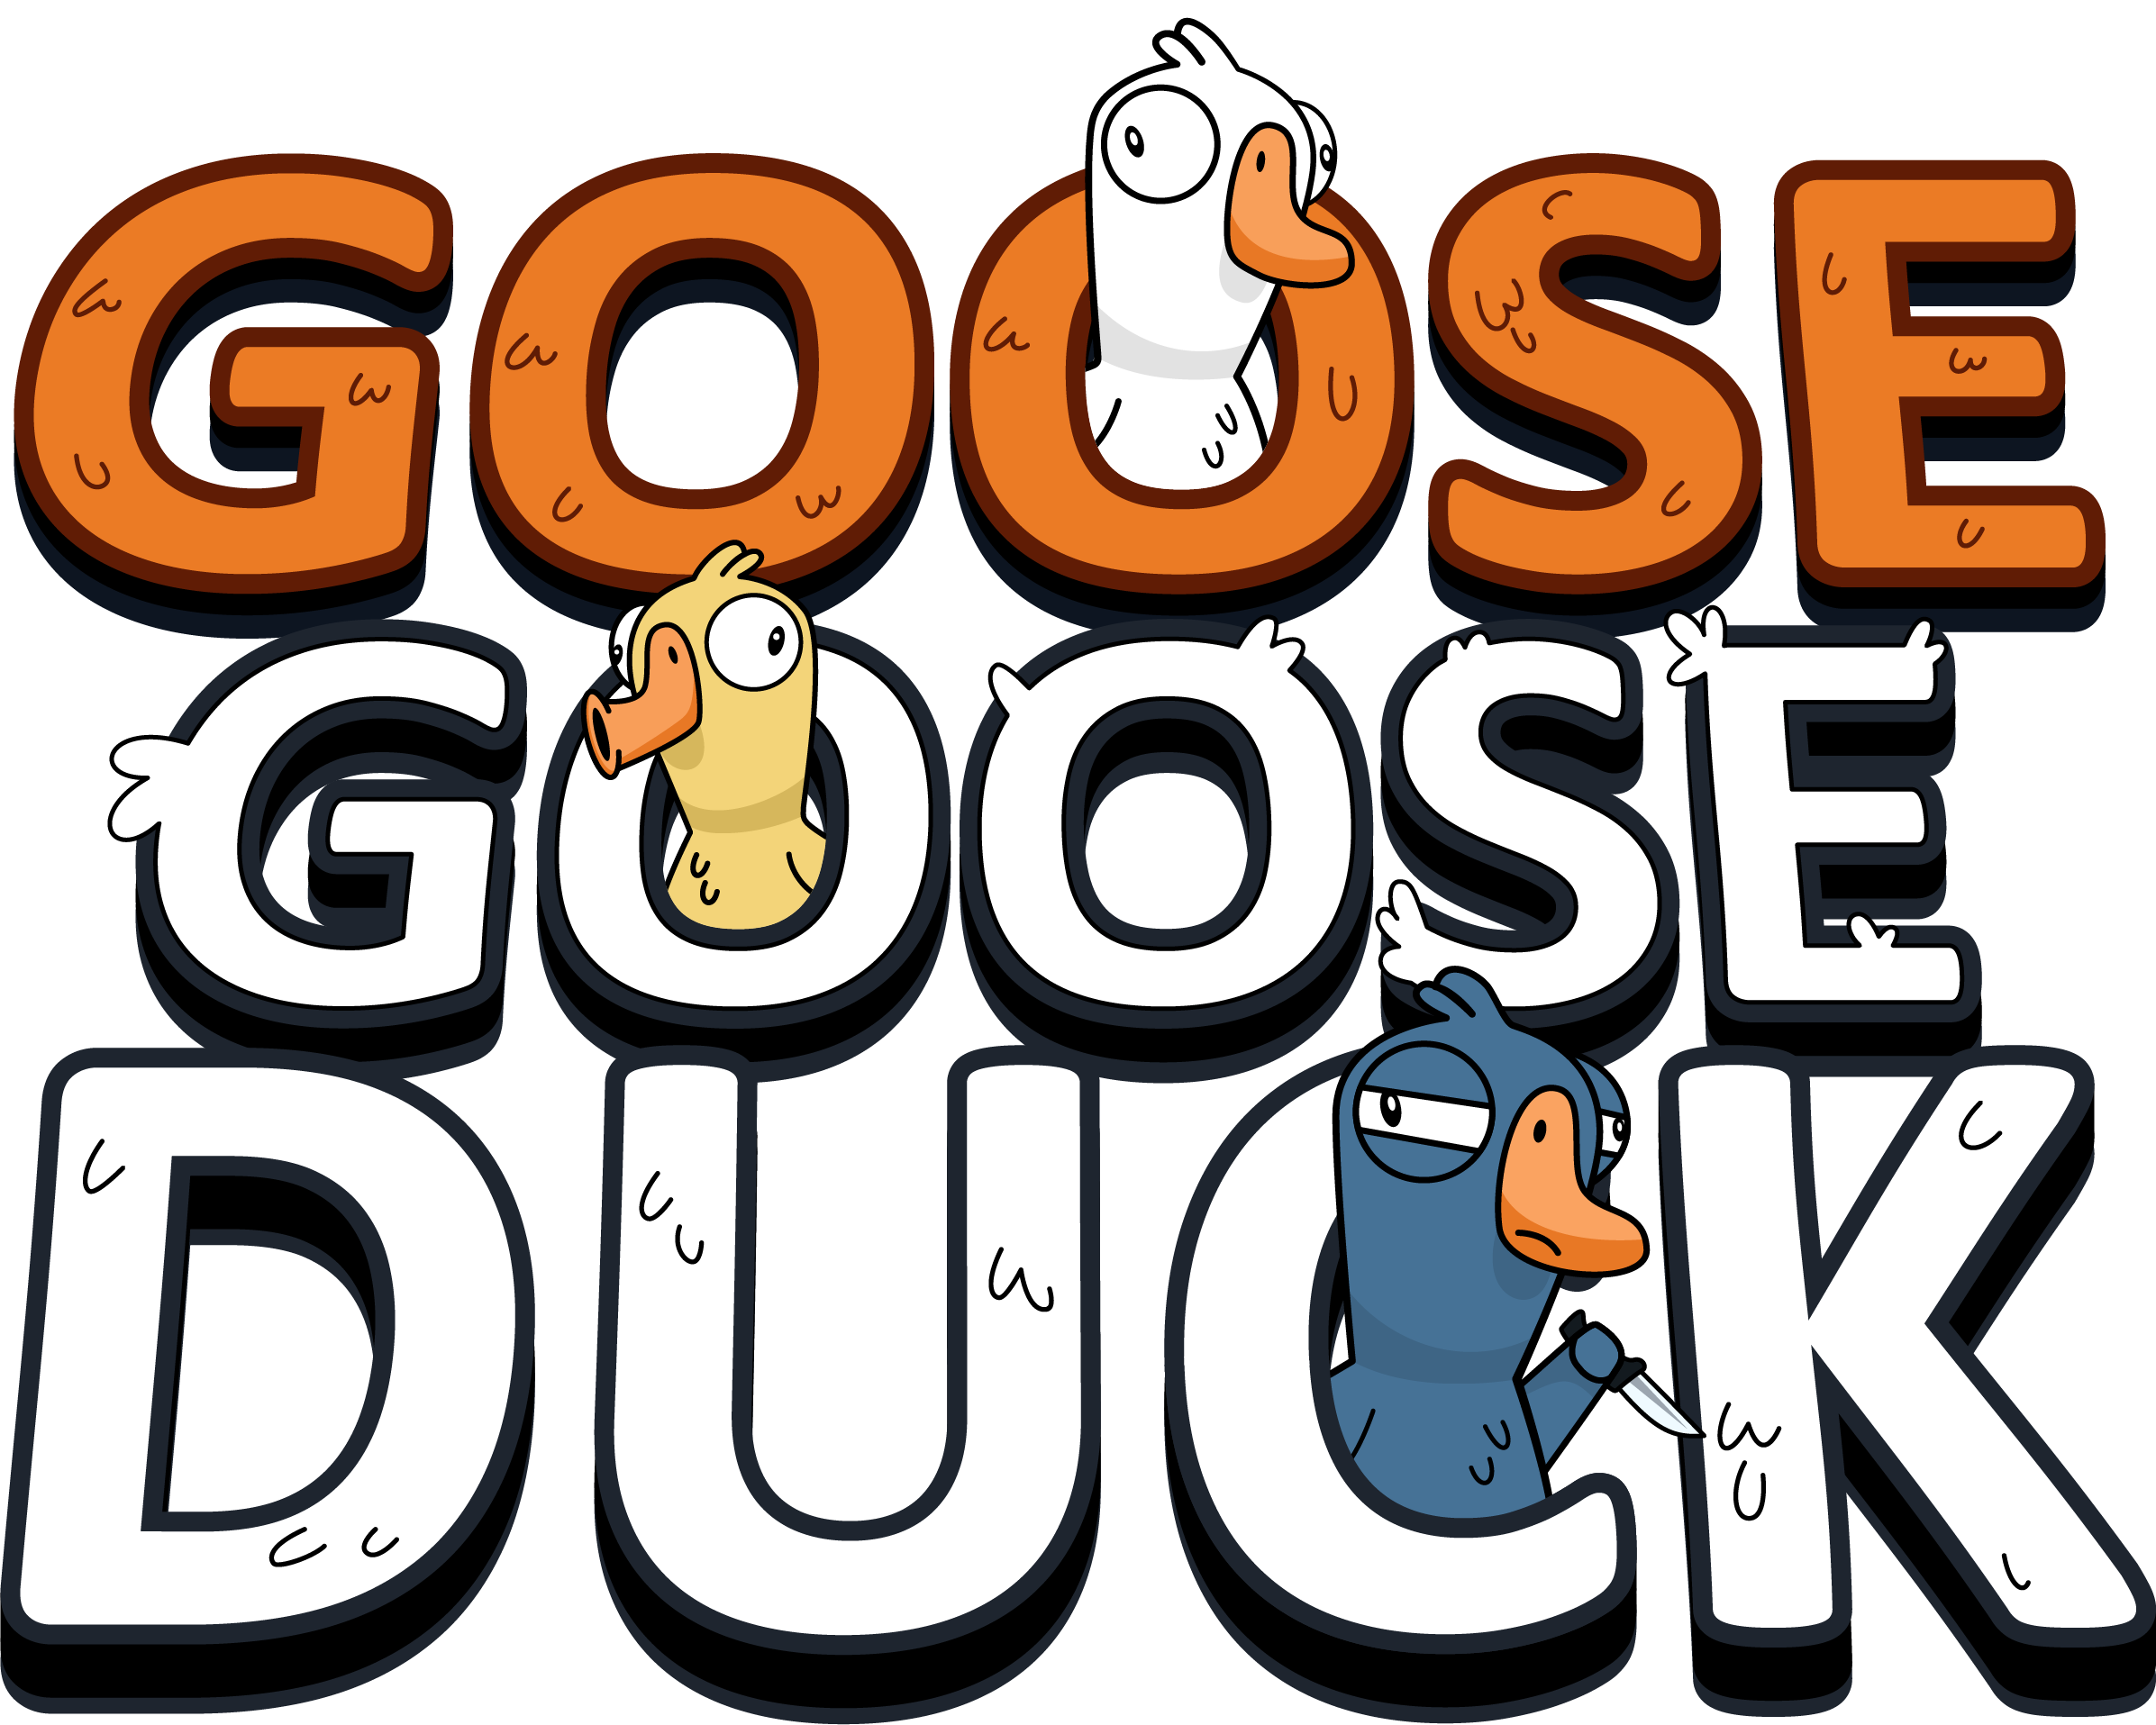 Duck duck goose cupcakke music video